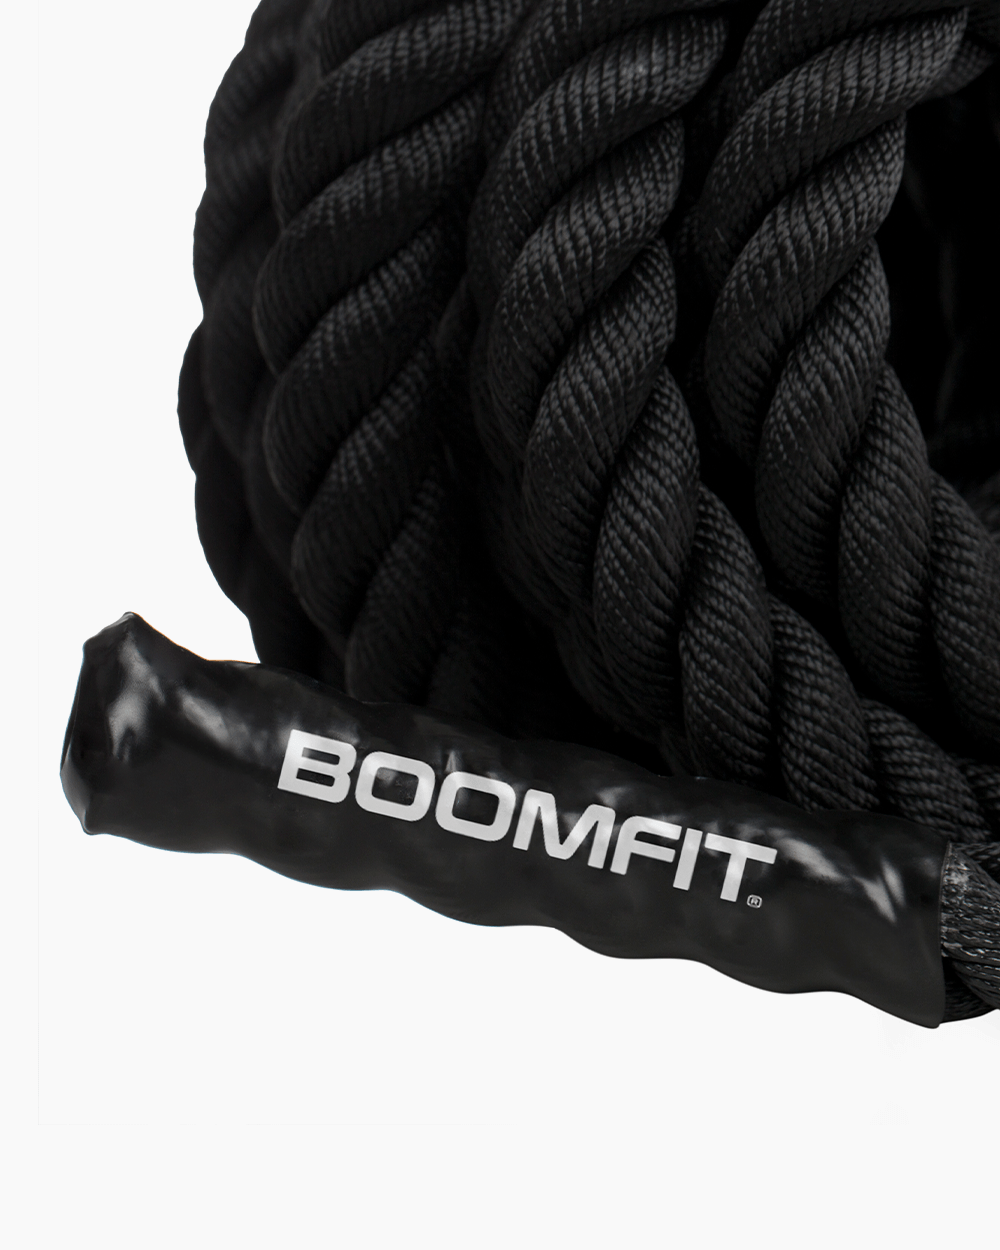 Cuerda De Batalla Boomfit 9m - Battle Rope 9m - Boomfit  MKP